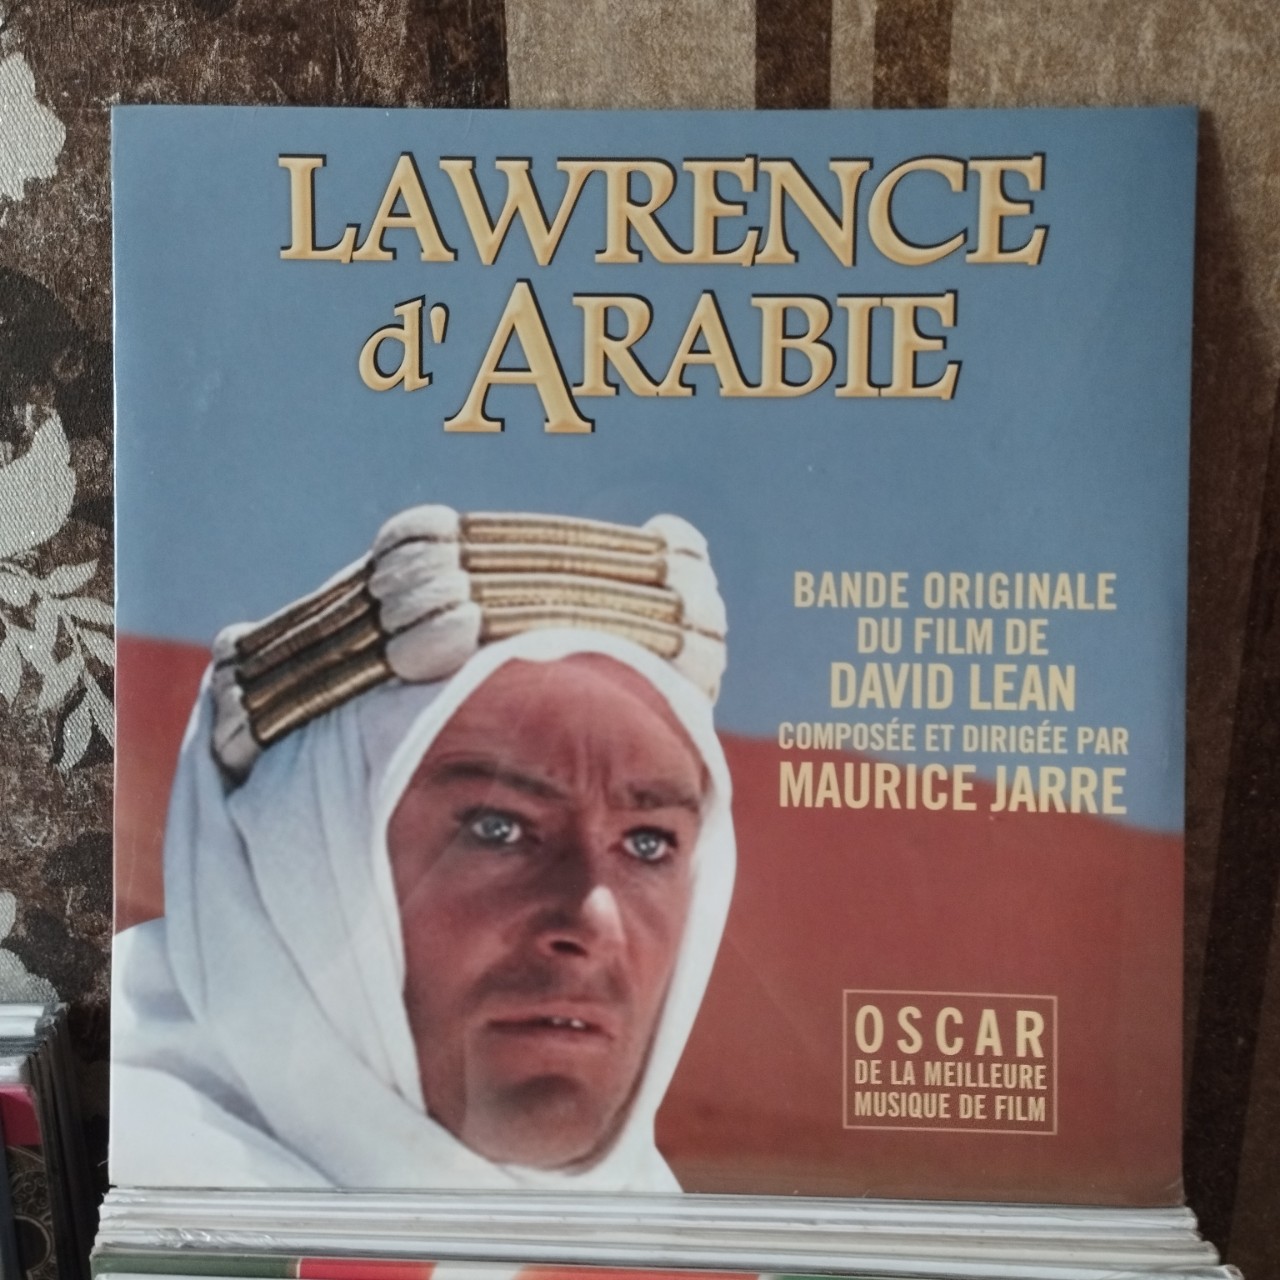 Đĩa than - LP - Lawrence DArabie - soundtrack - New vinyl record